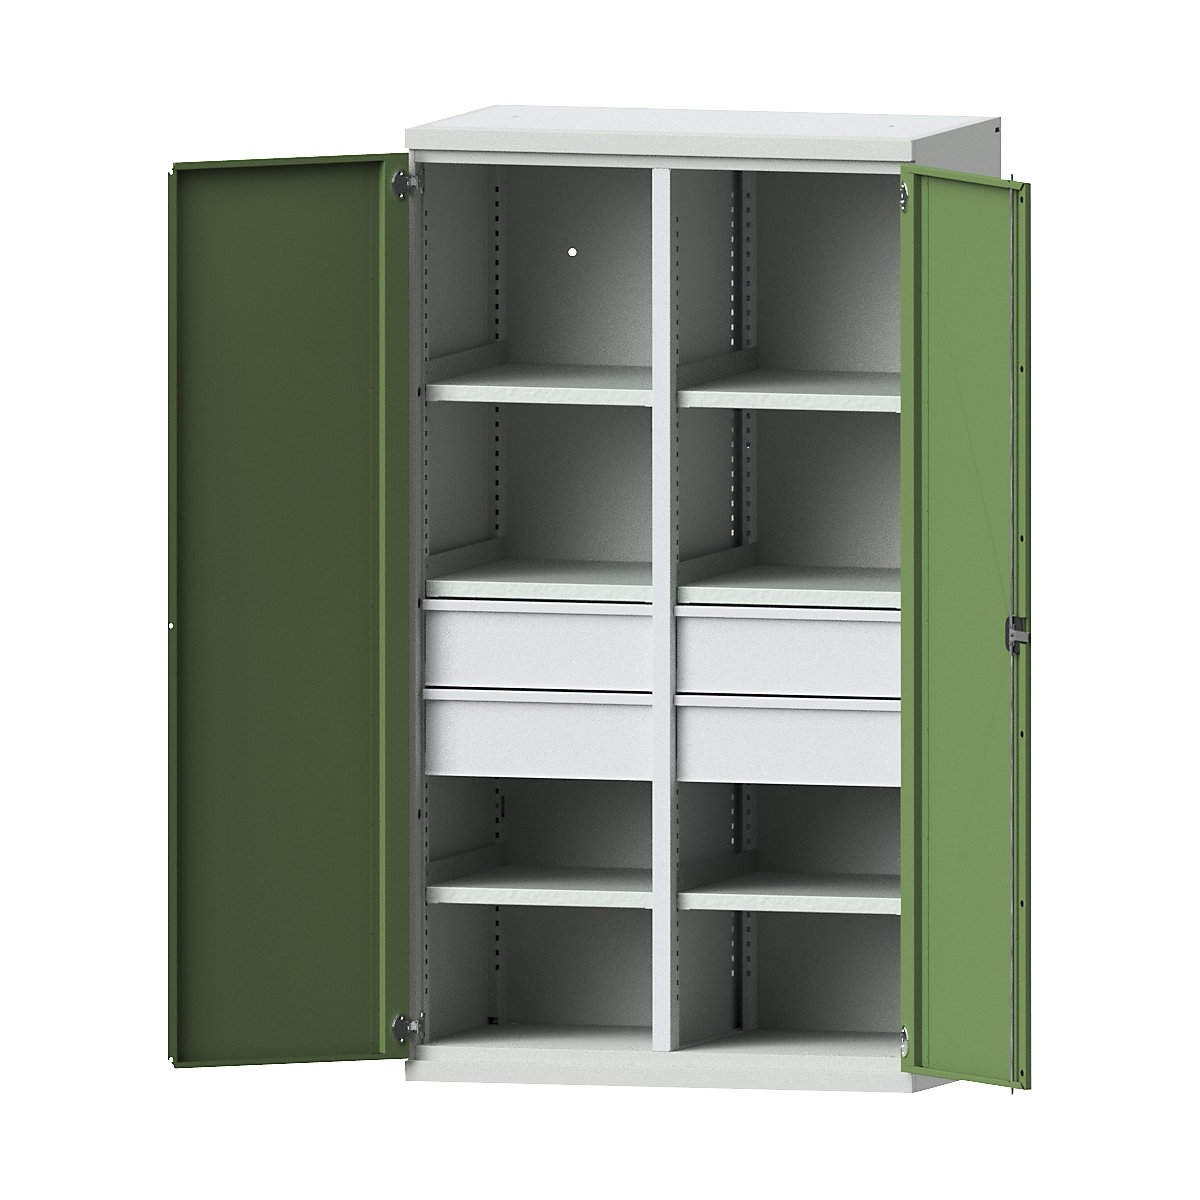 Heavy duty cupboard made of steel – eurokraft pro, 6 shelves, 4 x 180 mm high drawers, light grey / reseda green-11